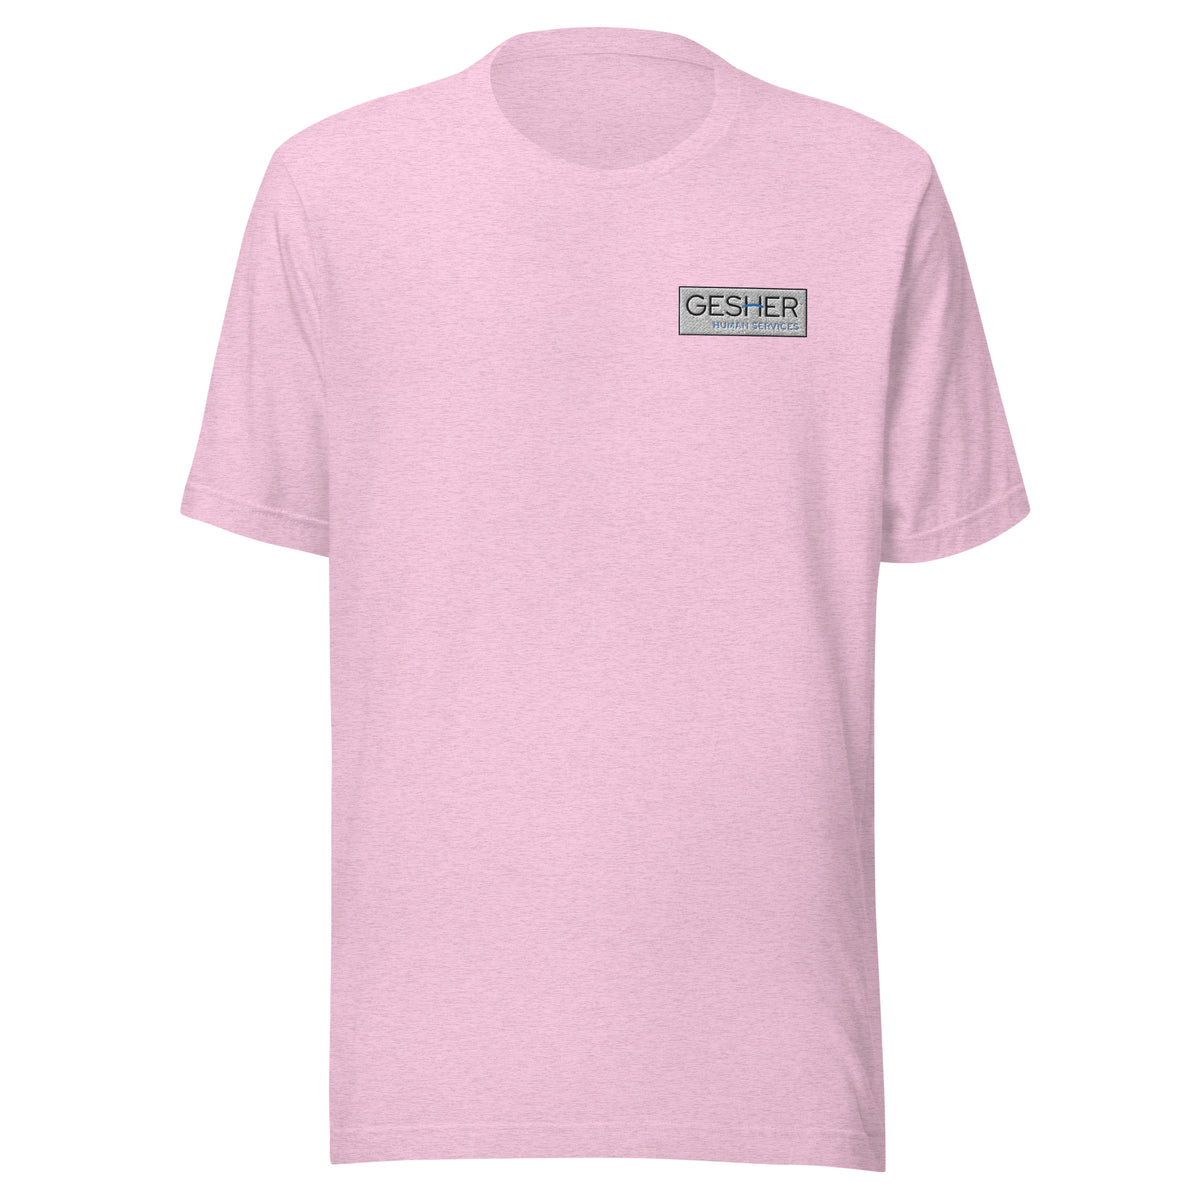 Gesher Unisex T-shirt | Embroidered Logo